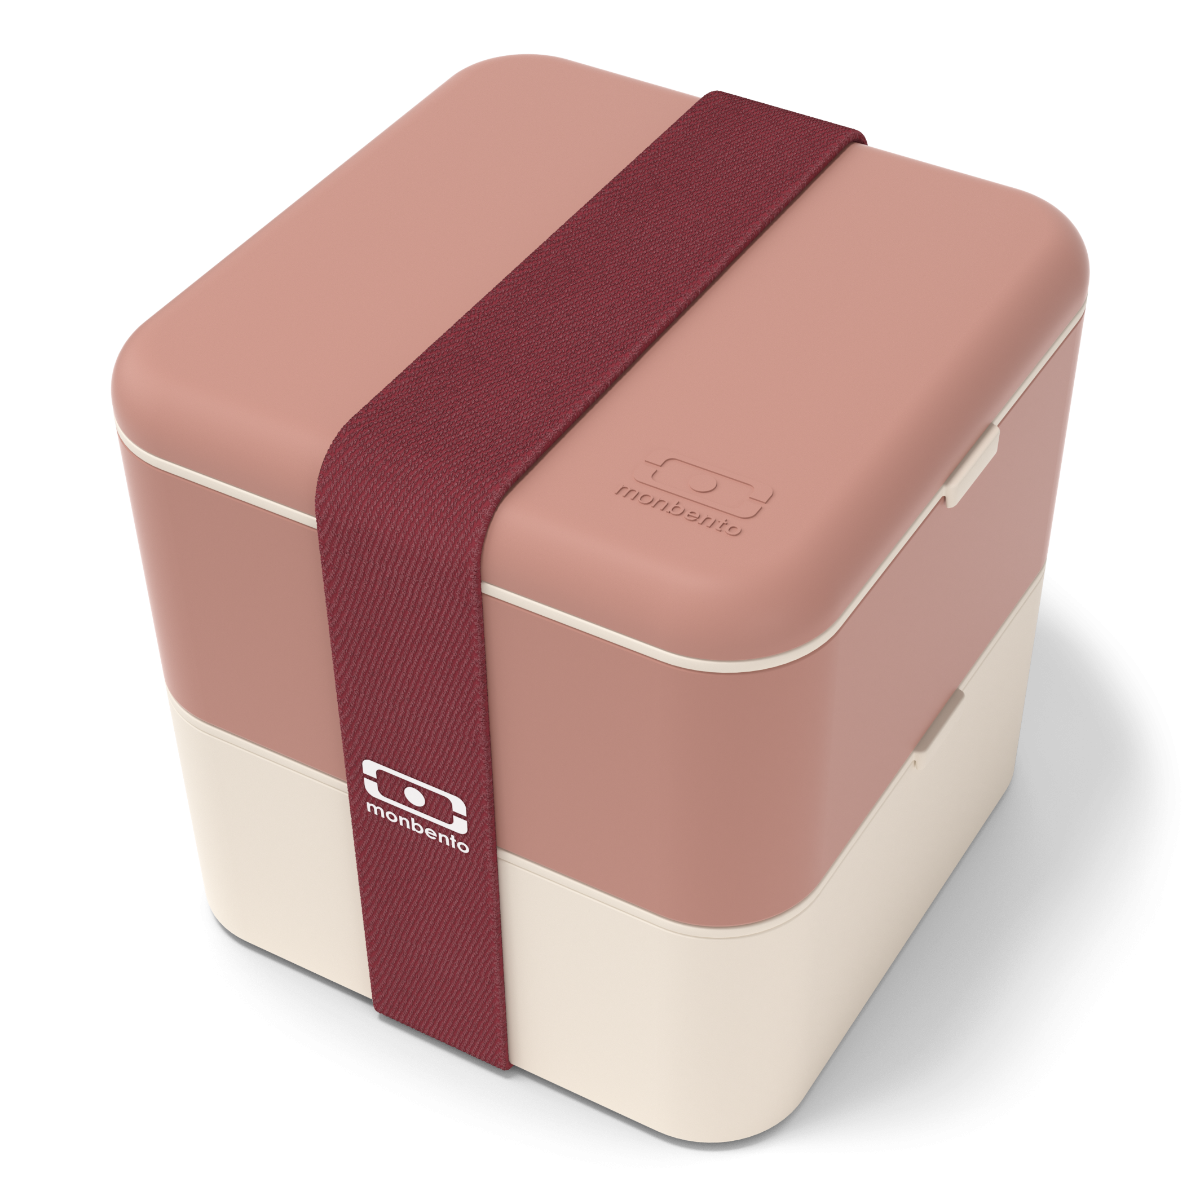 Svačinový bento box MonBento Square pink Moka | krémová, hnědá